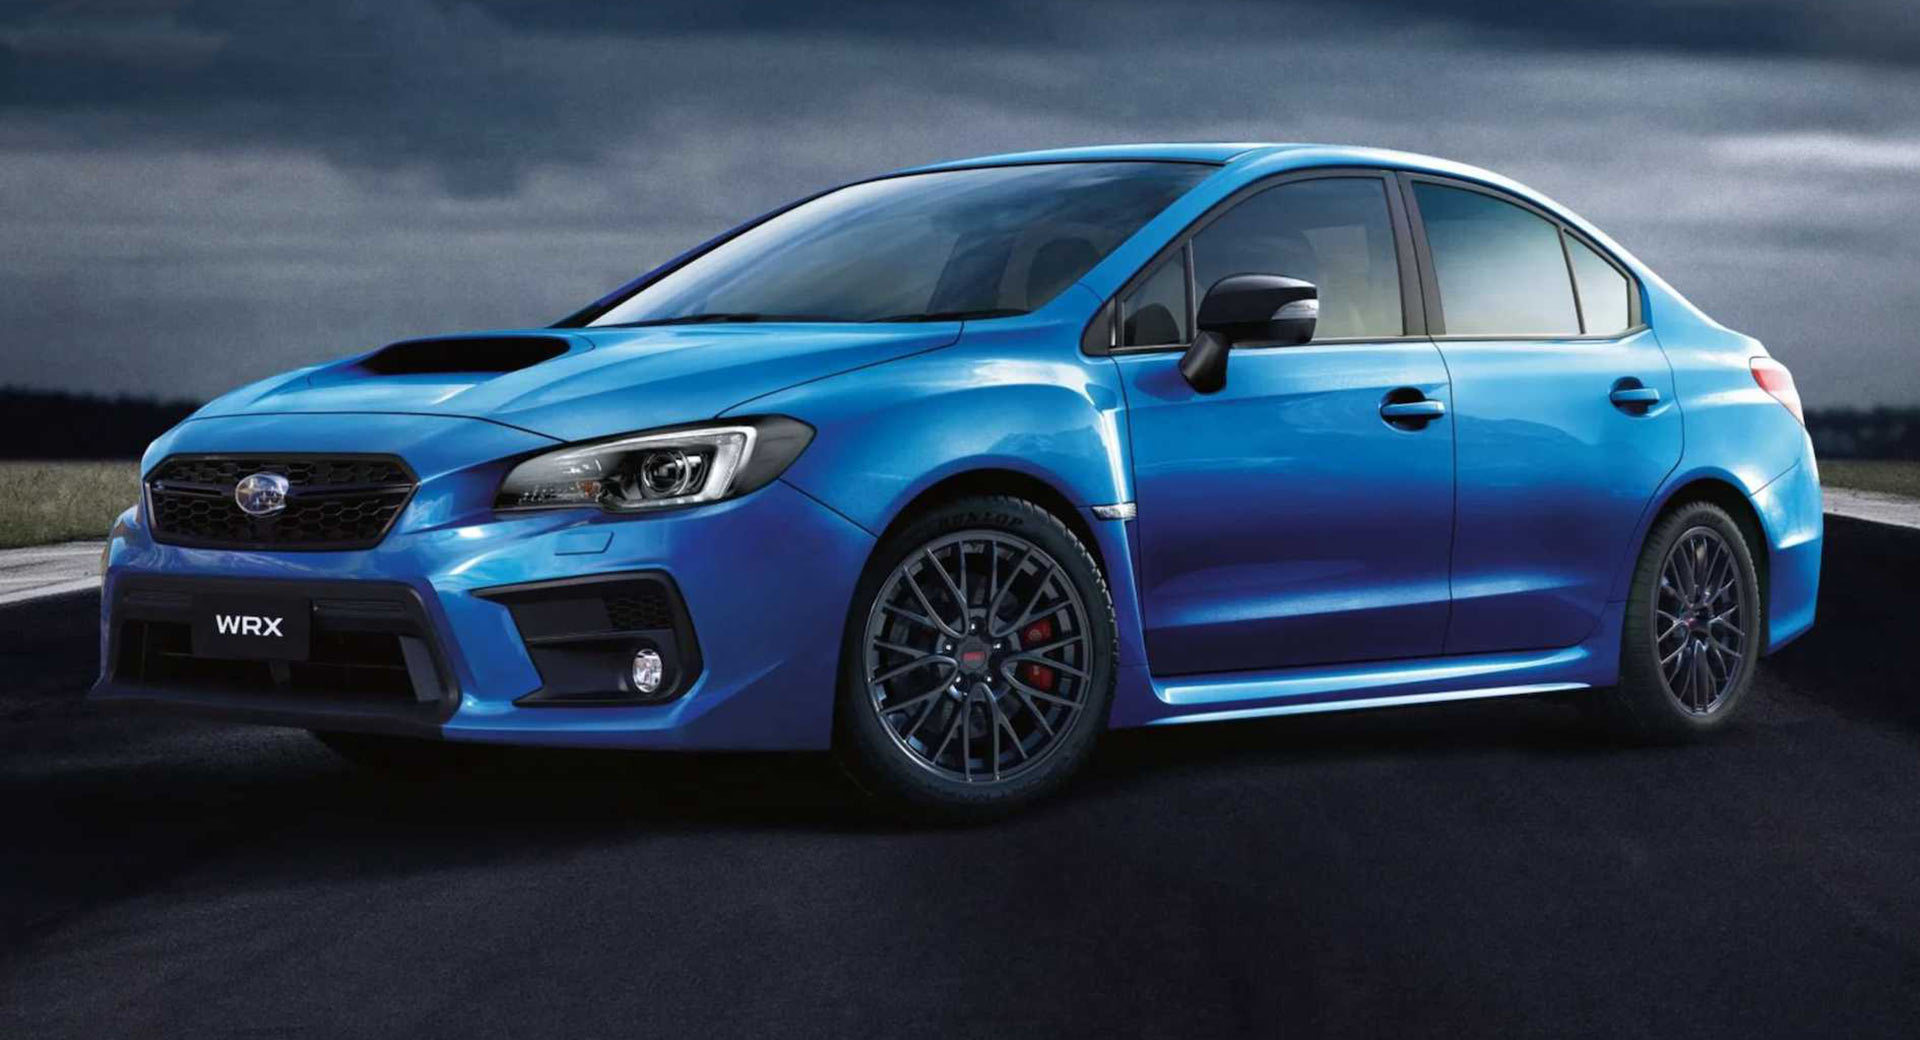 New 2021 Subaru WRX Club Spec Is Exclusive To Australia